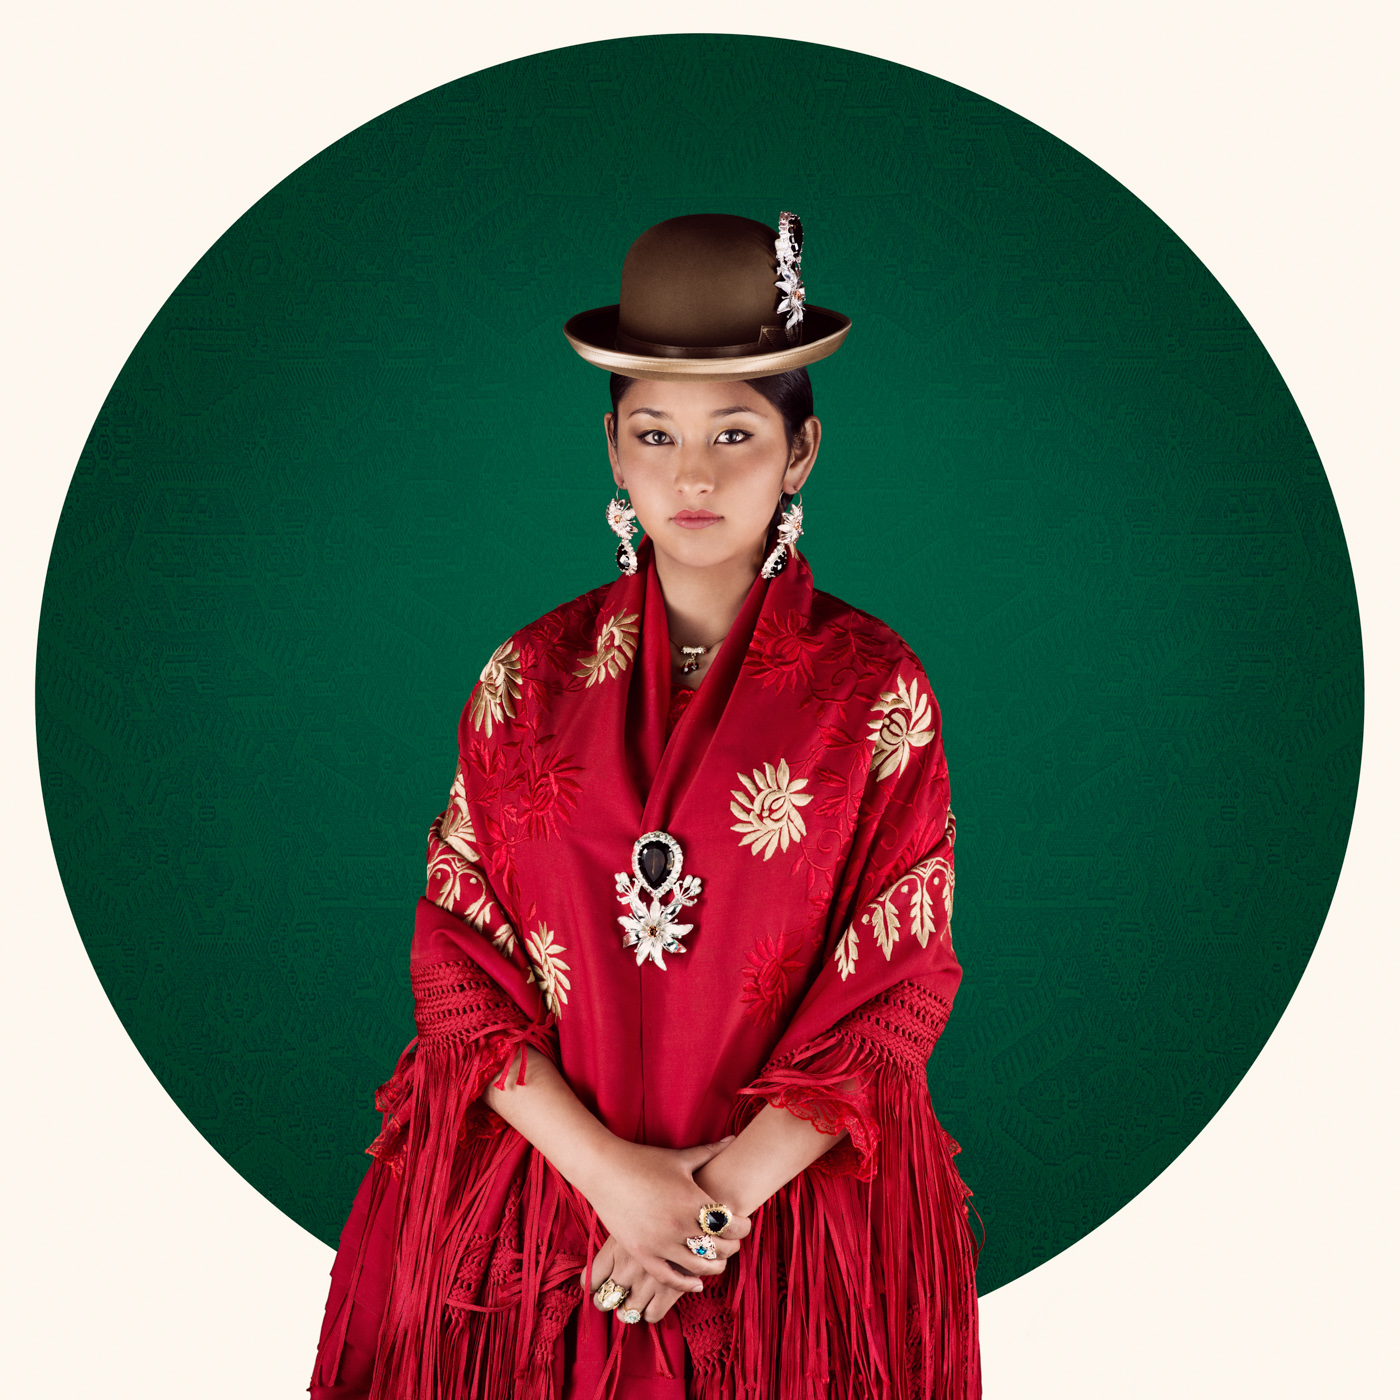 Documentaire Cholitas – Les catcheuses boliviennes